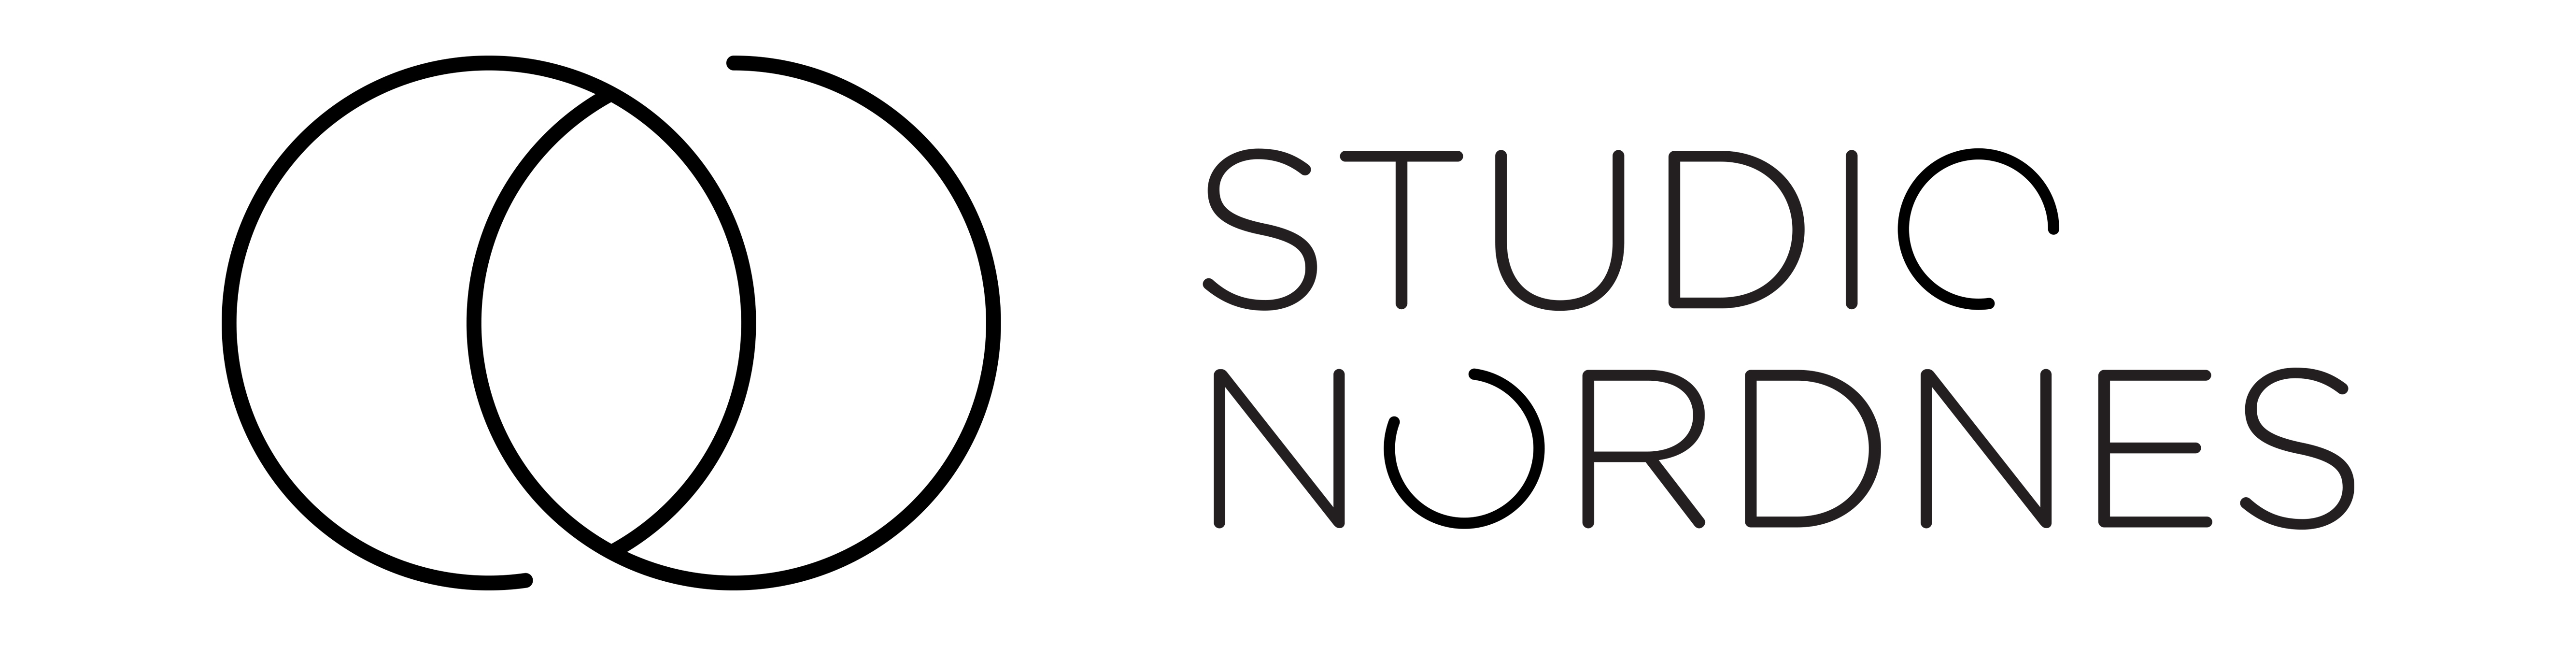 Studio Nordnes logo